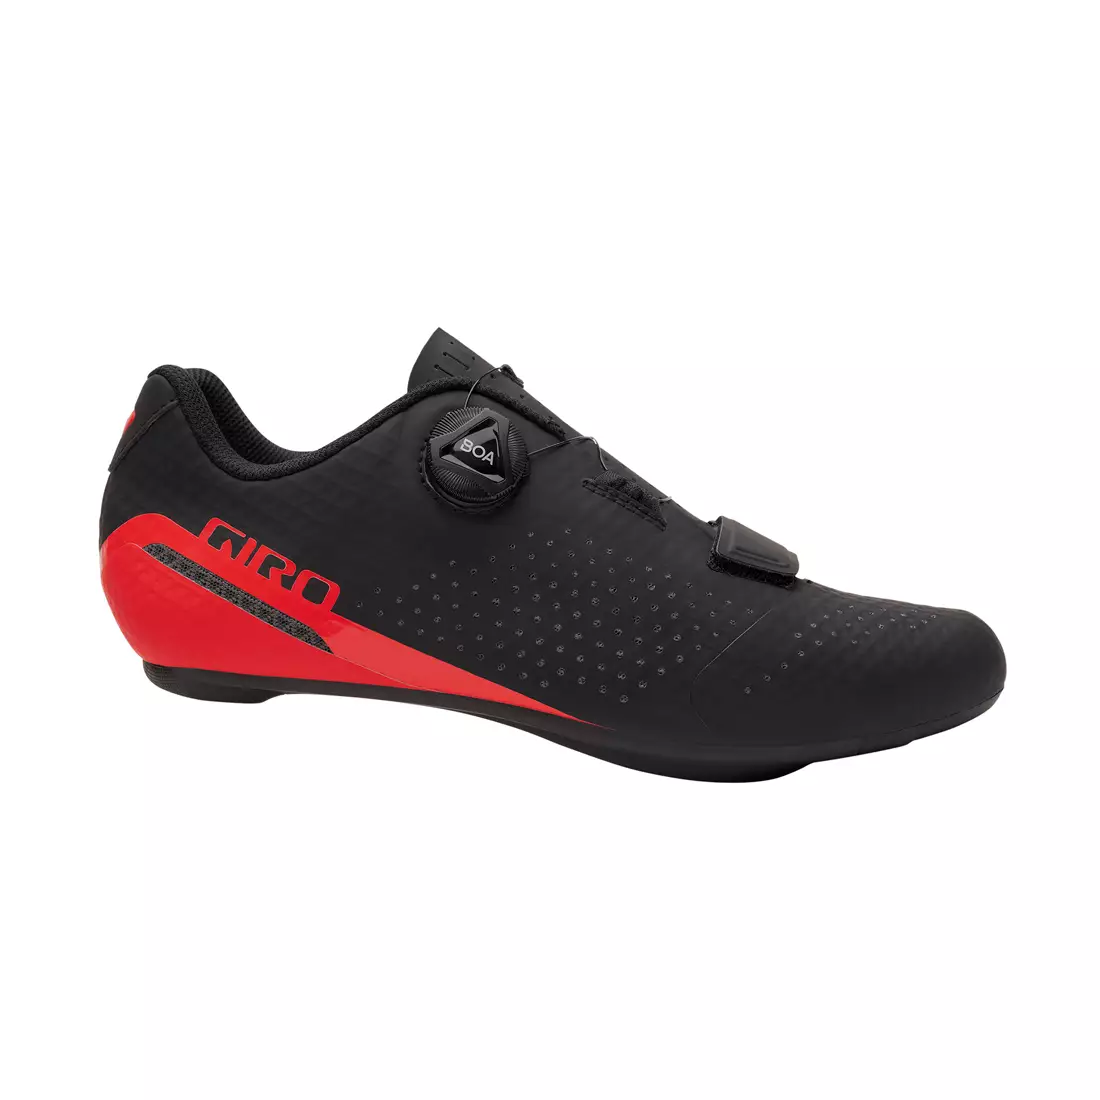 GIRO férfi kerékpáros cipő CADET black bright red GR-7126122